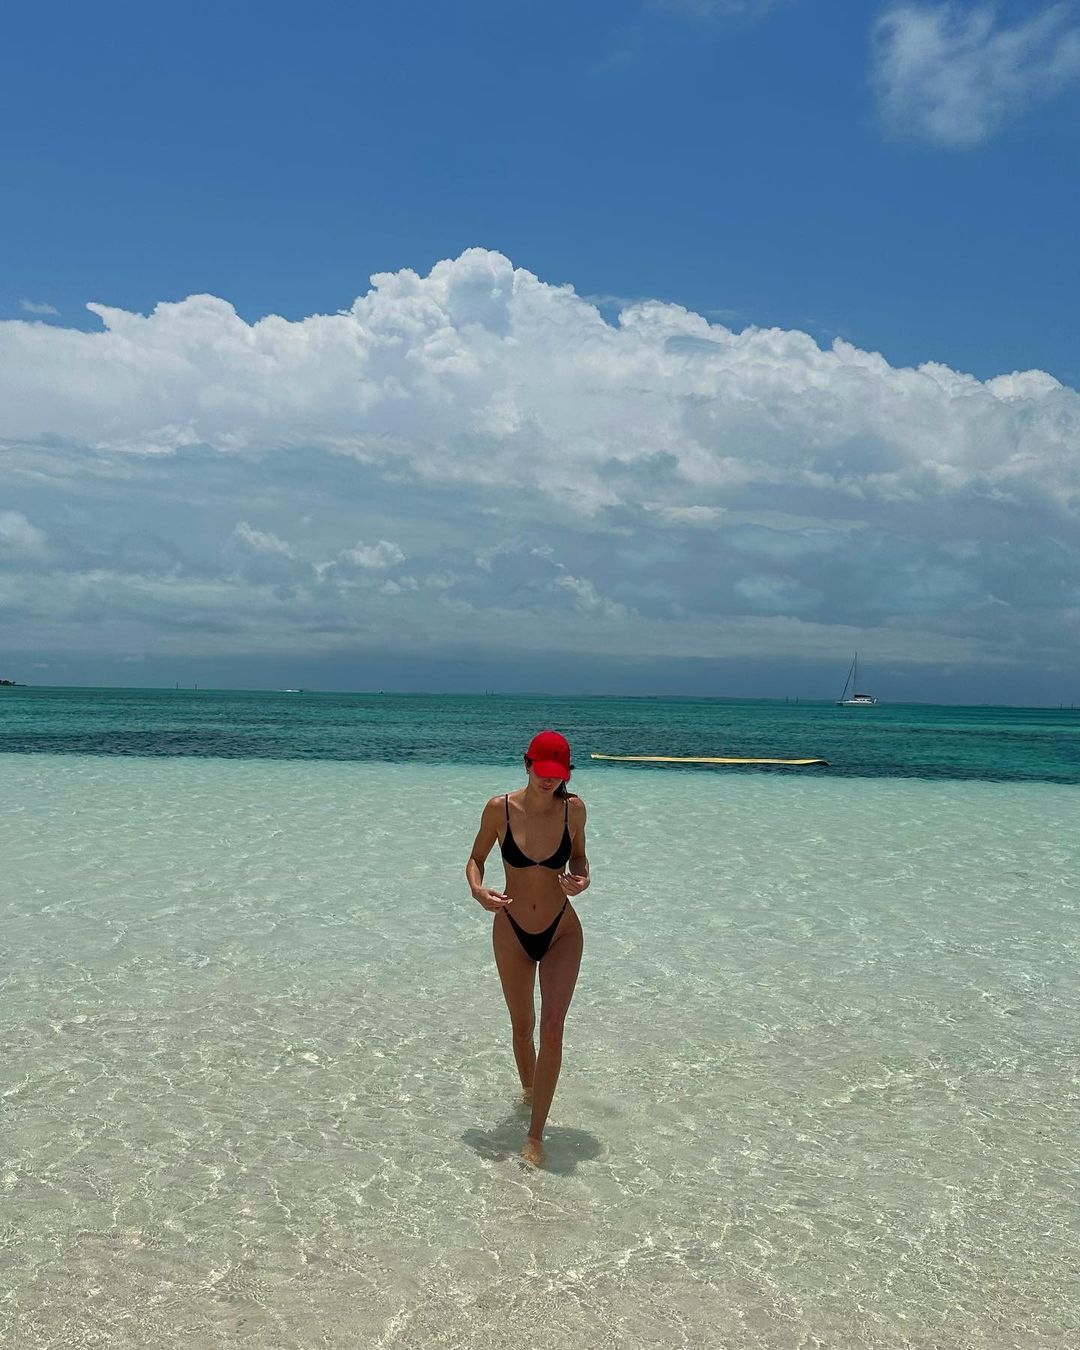 Photos n°3 : Life’s a Beach for Kendall Jenner!